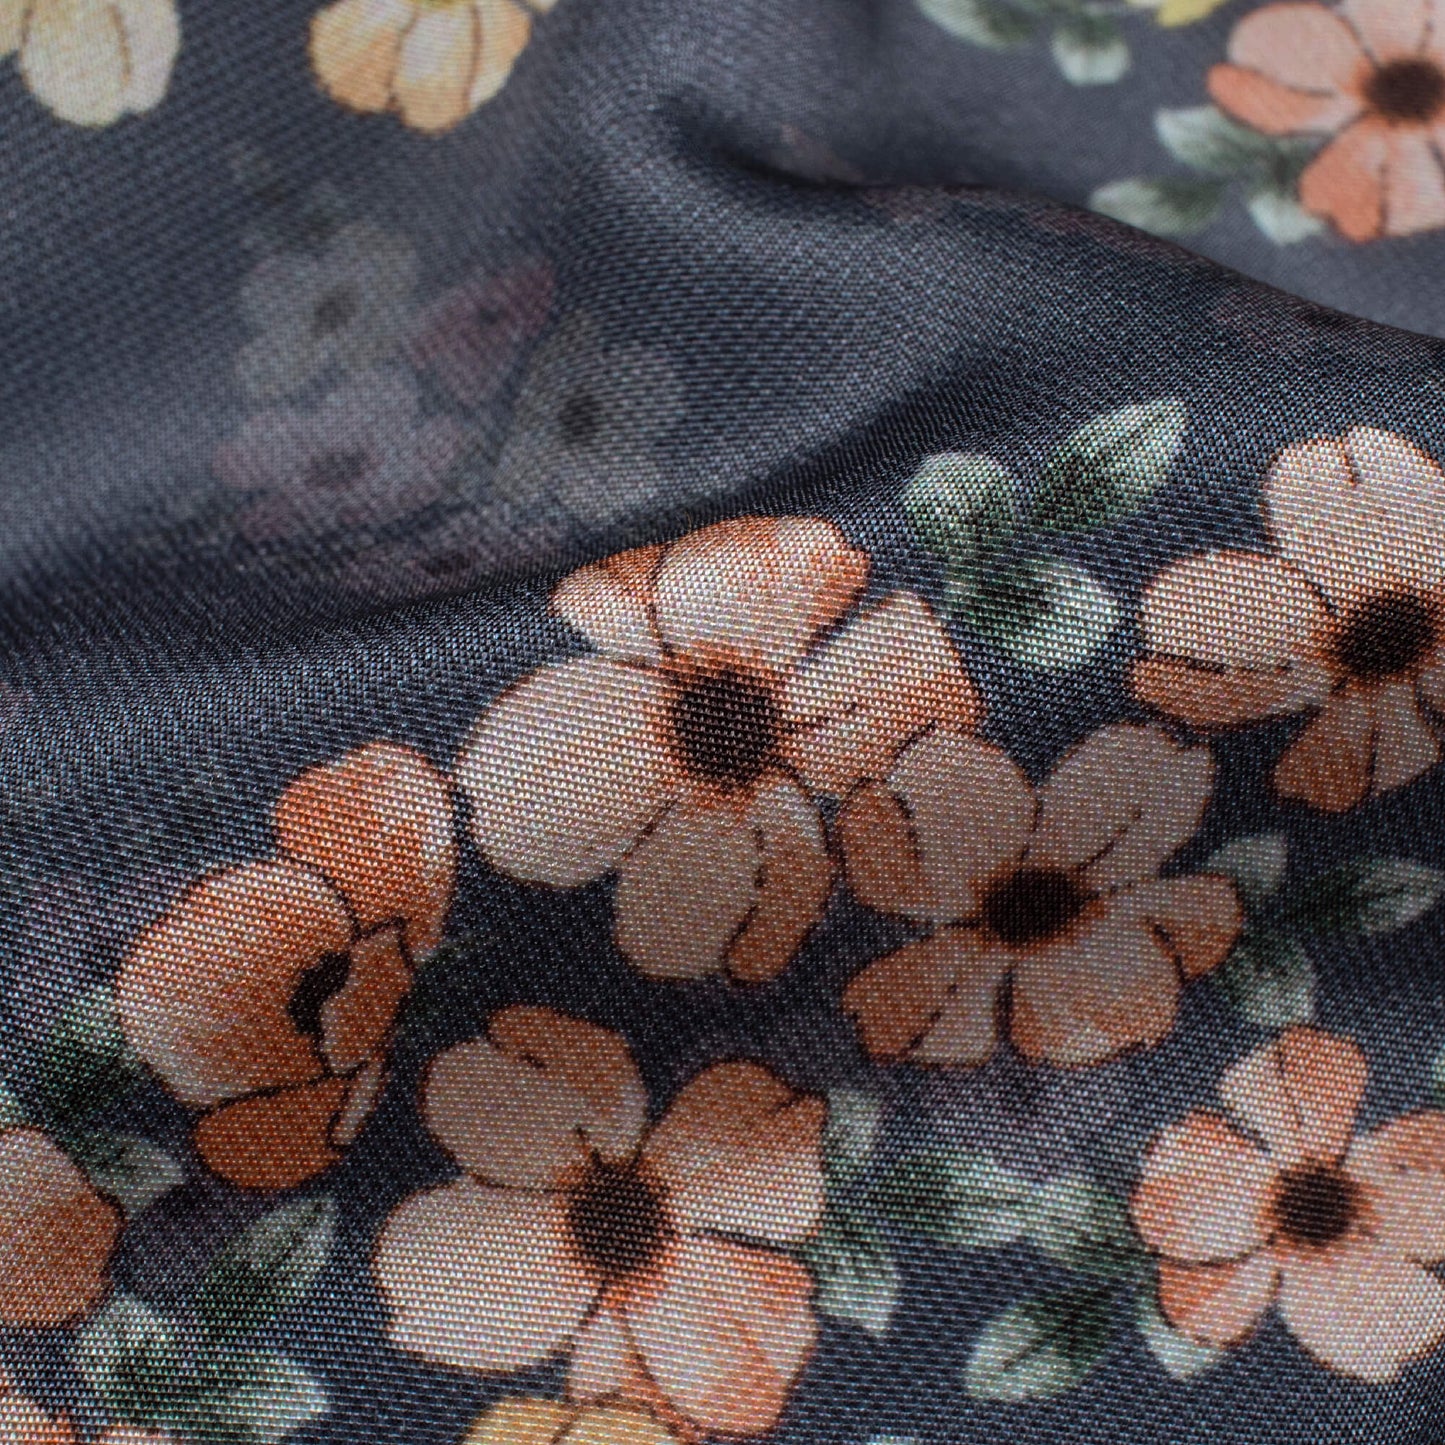 Dark Grey And Peach Floral Pattern Digital Print Crepe Silk Fabric